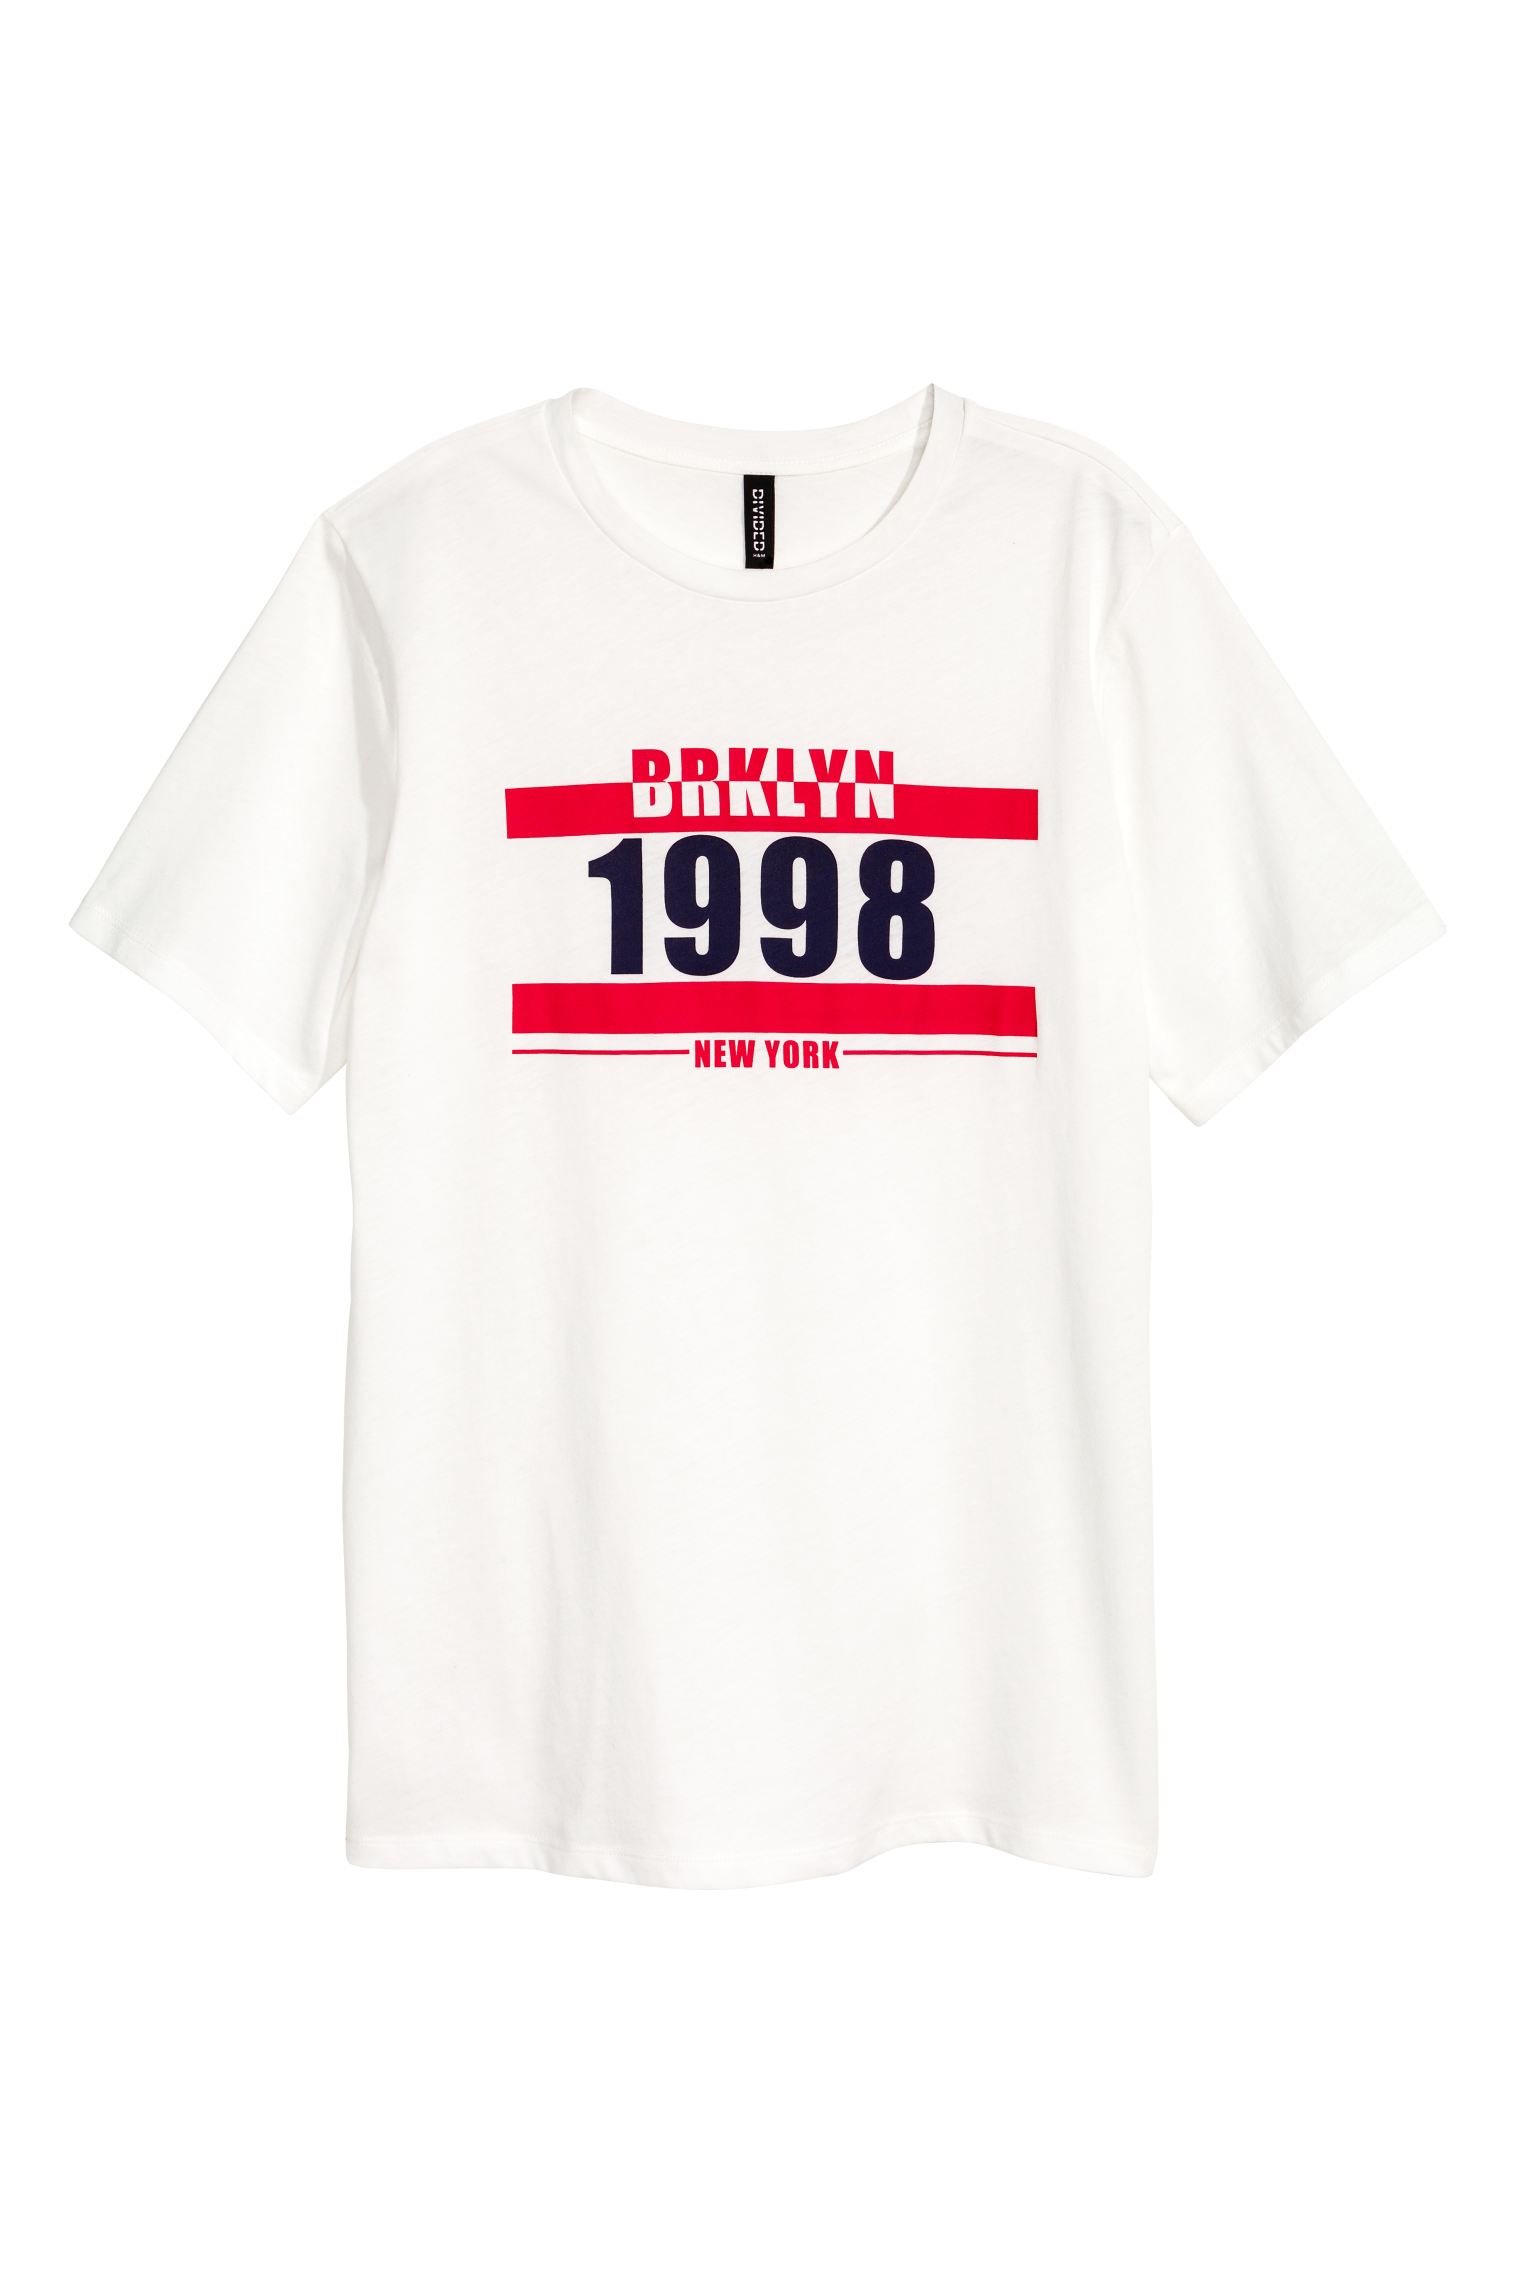 H&M Brklyn 1998 Printed T-Shirt.jpg